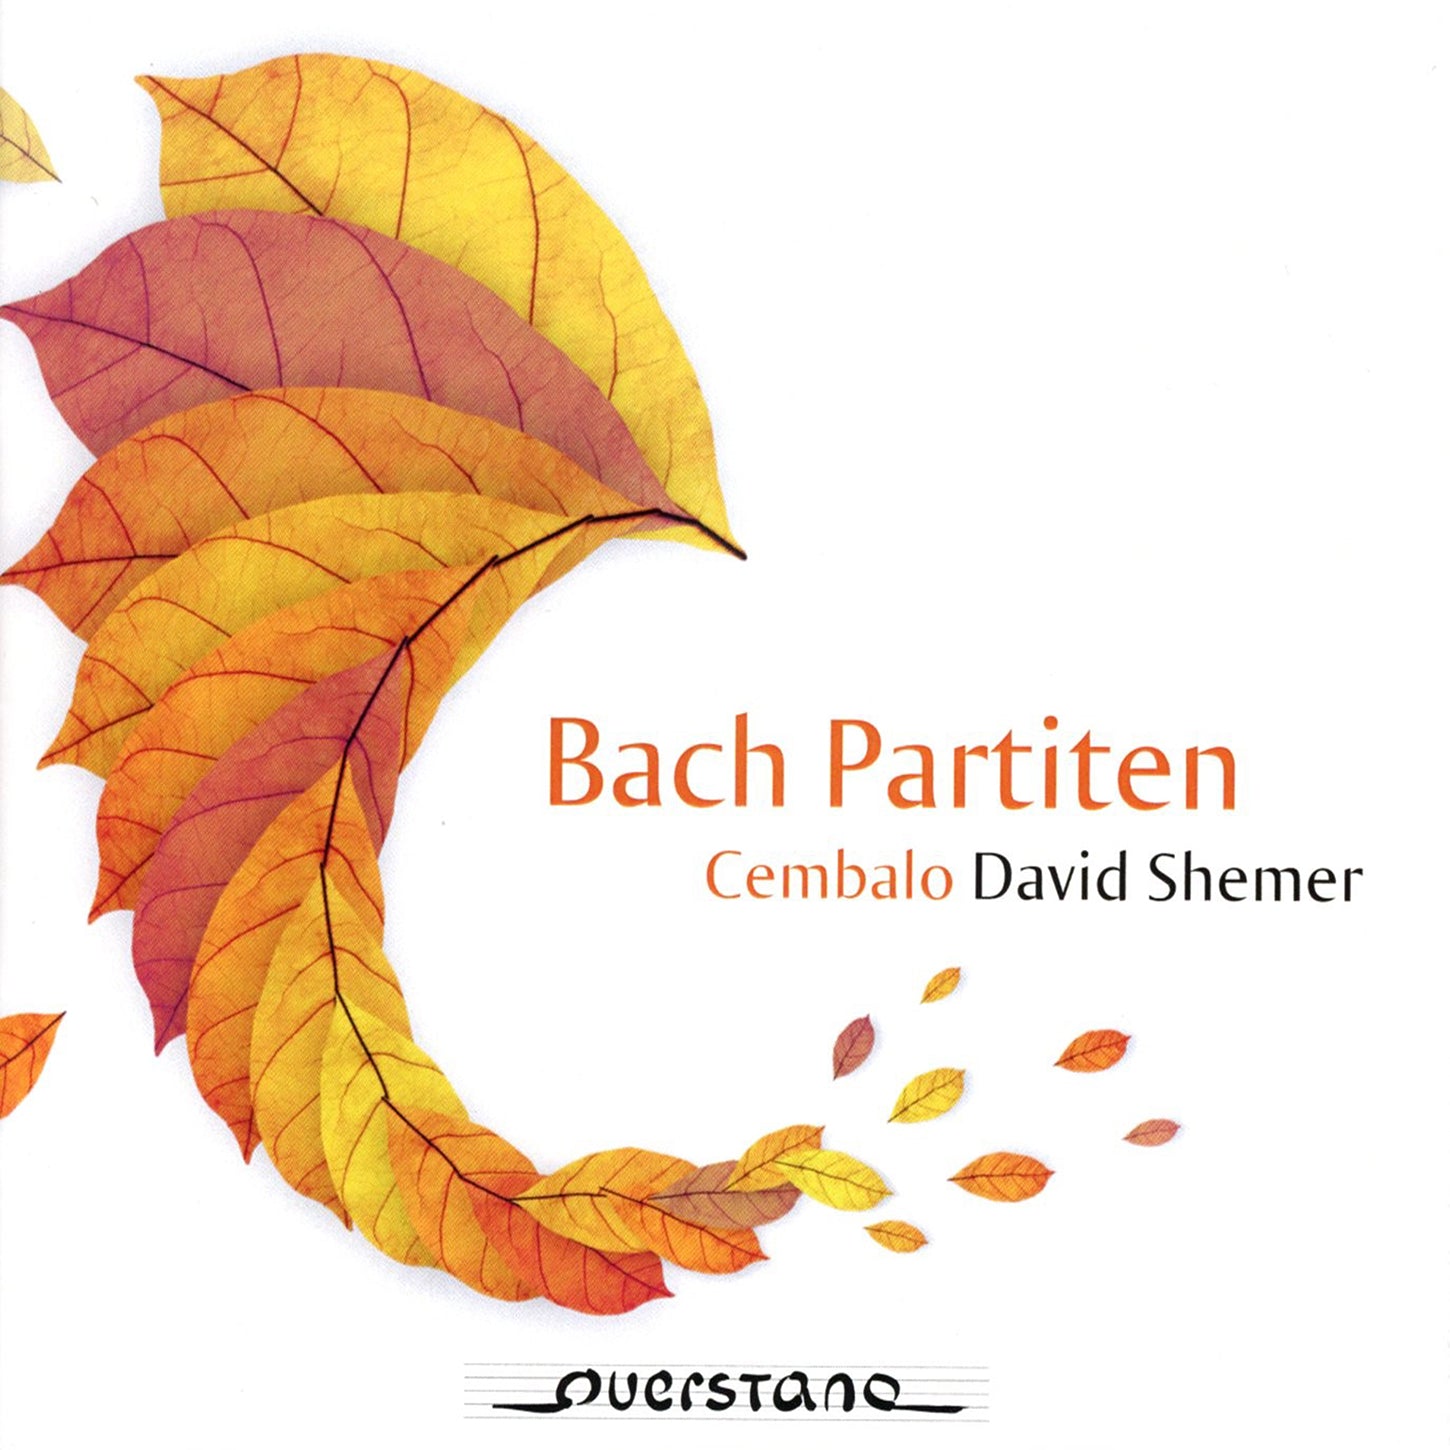 J.S. Bach: Partitas